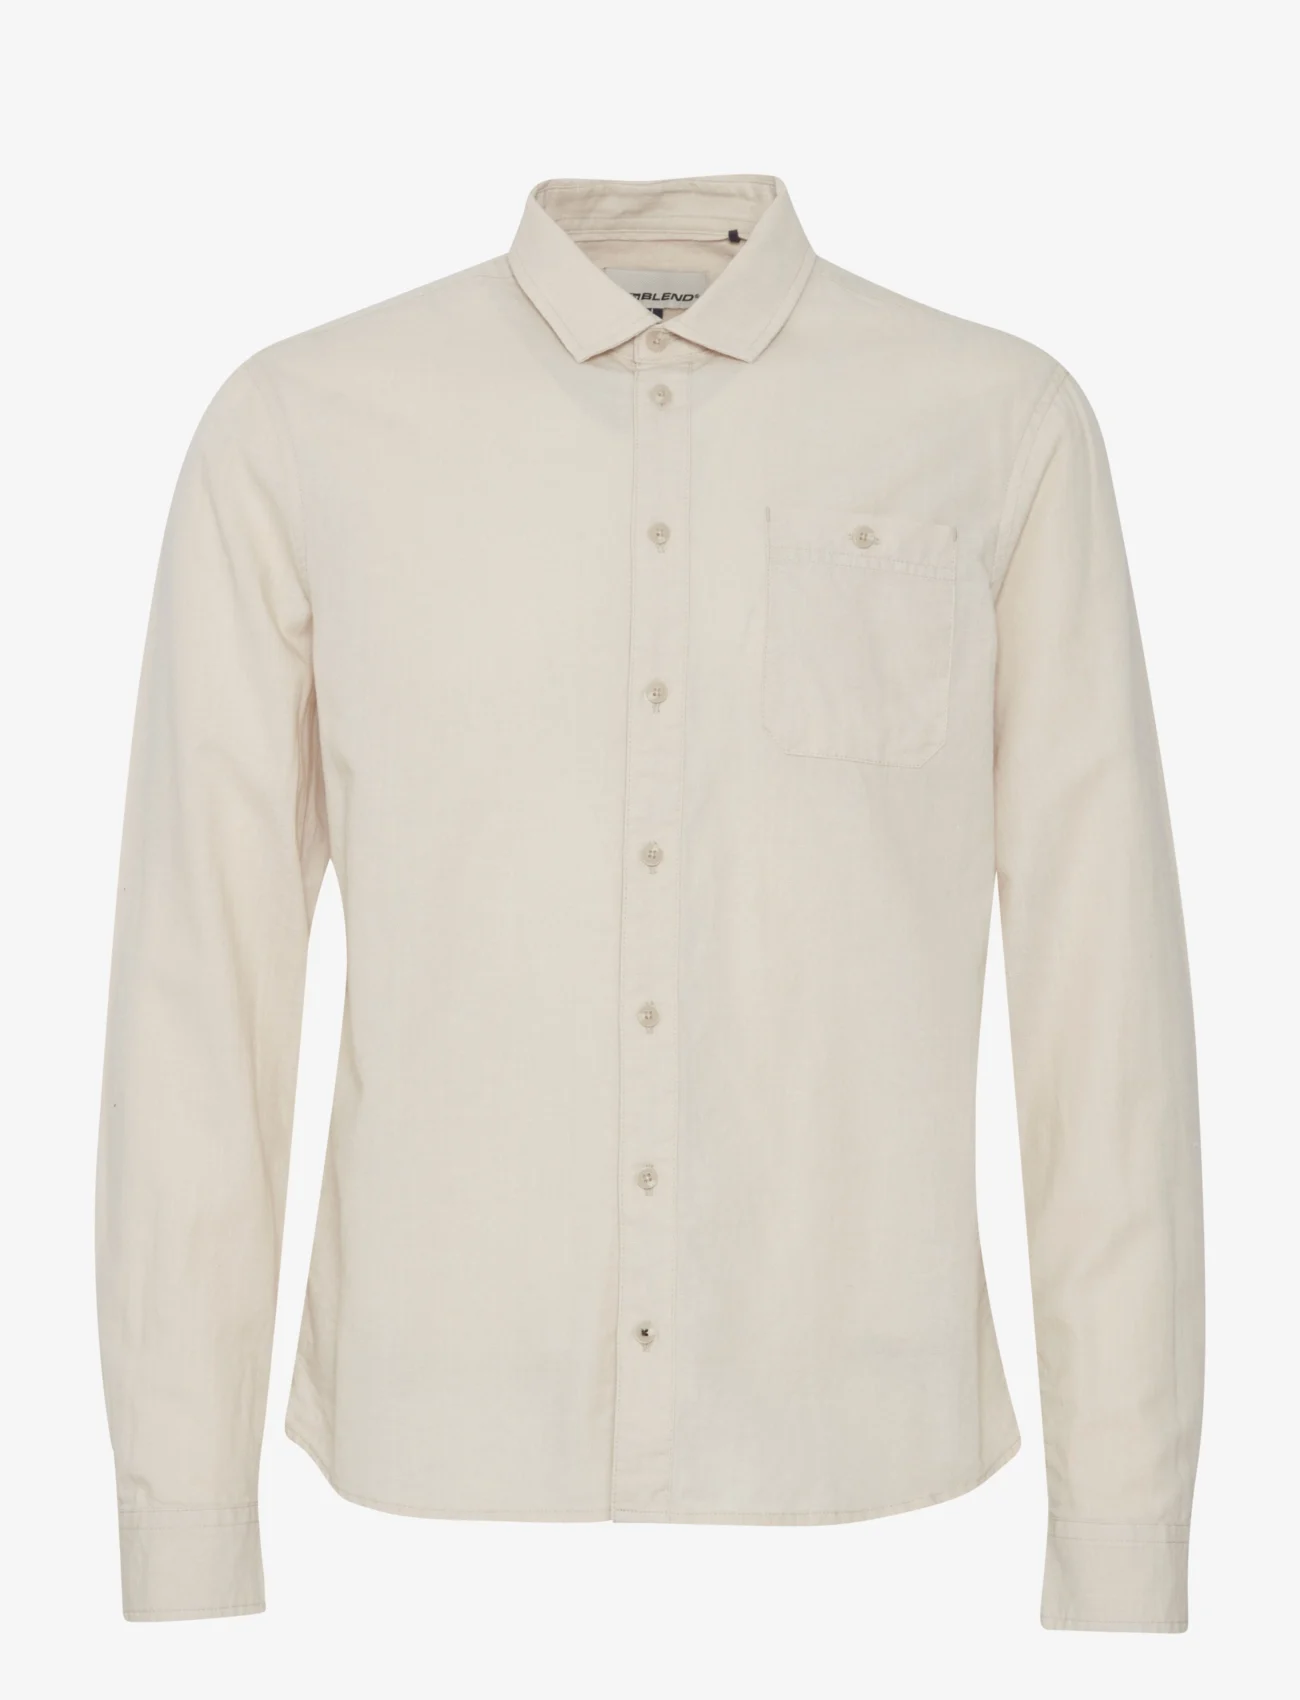 Blend - Shirt - casual skjortor - oyster gray - 0